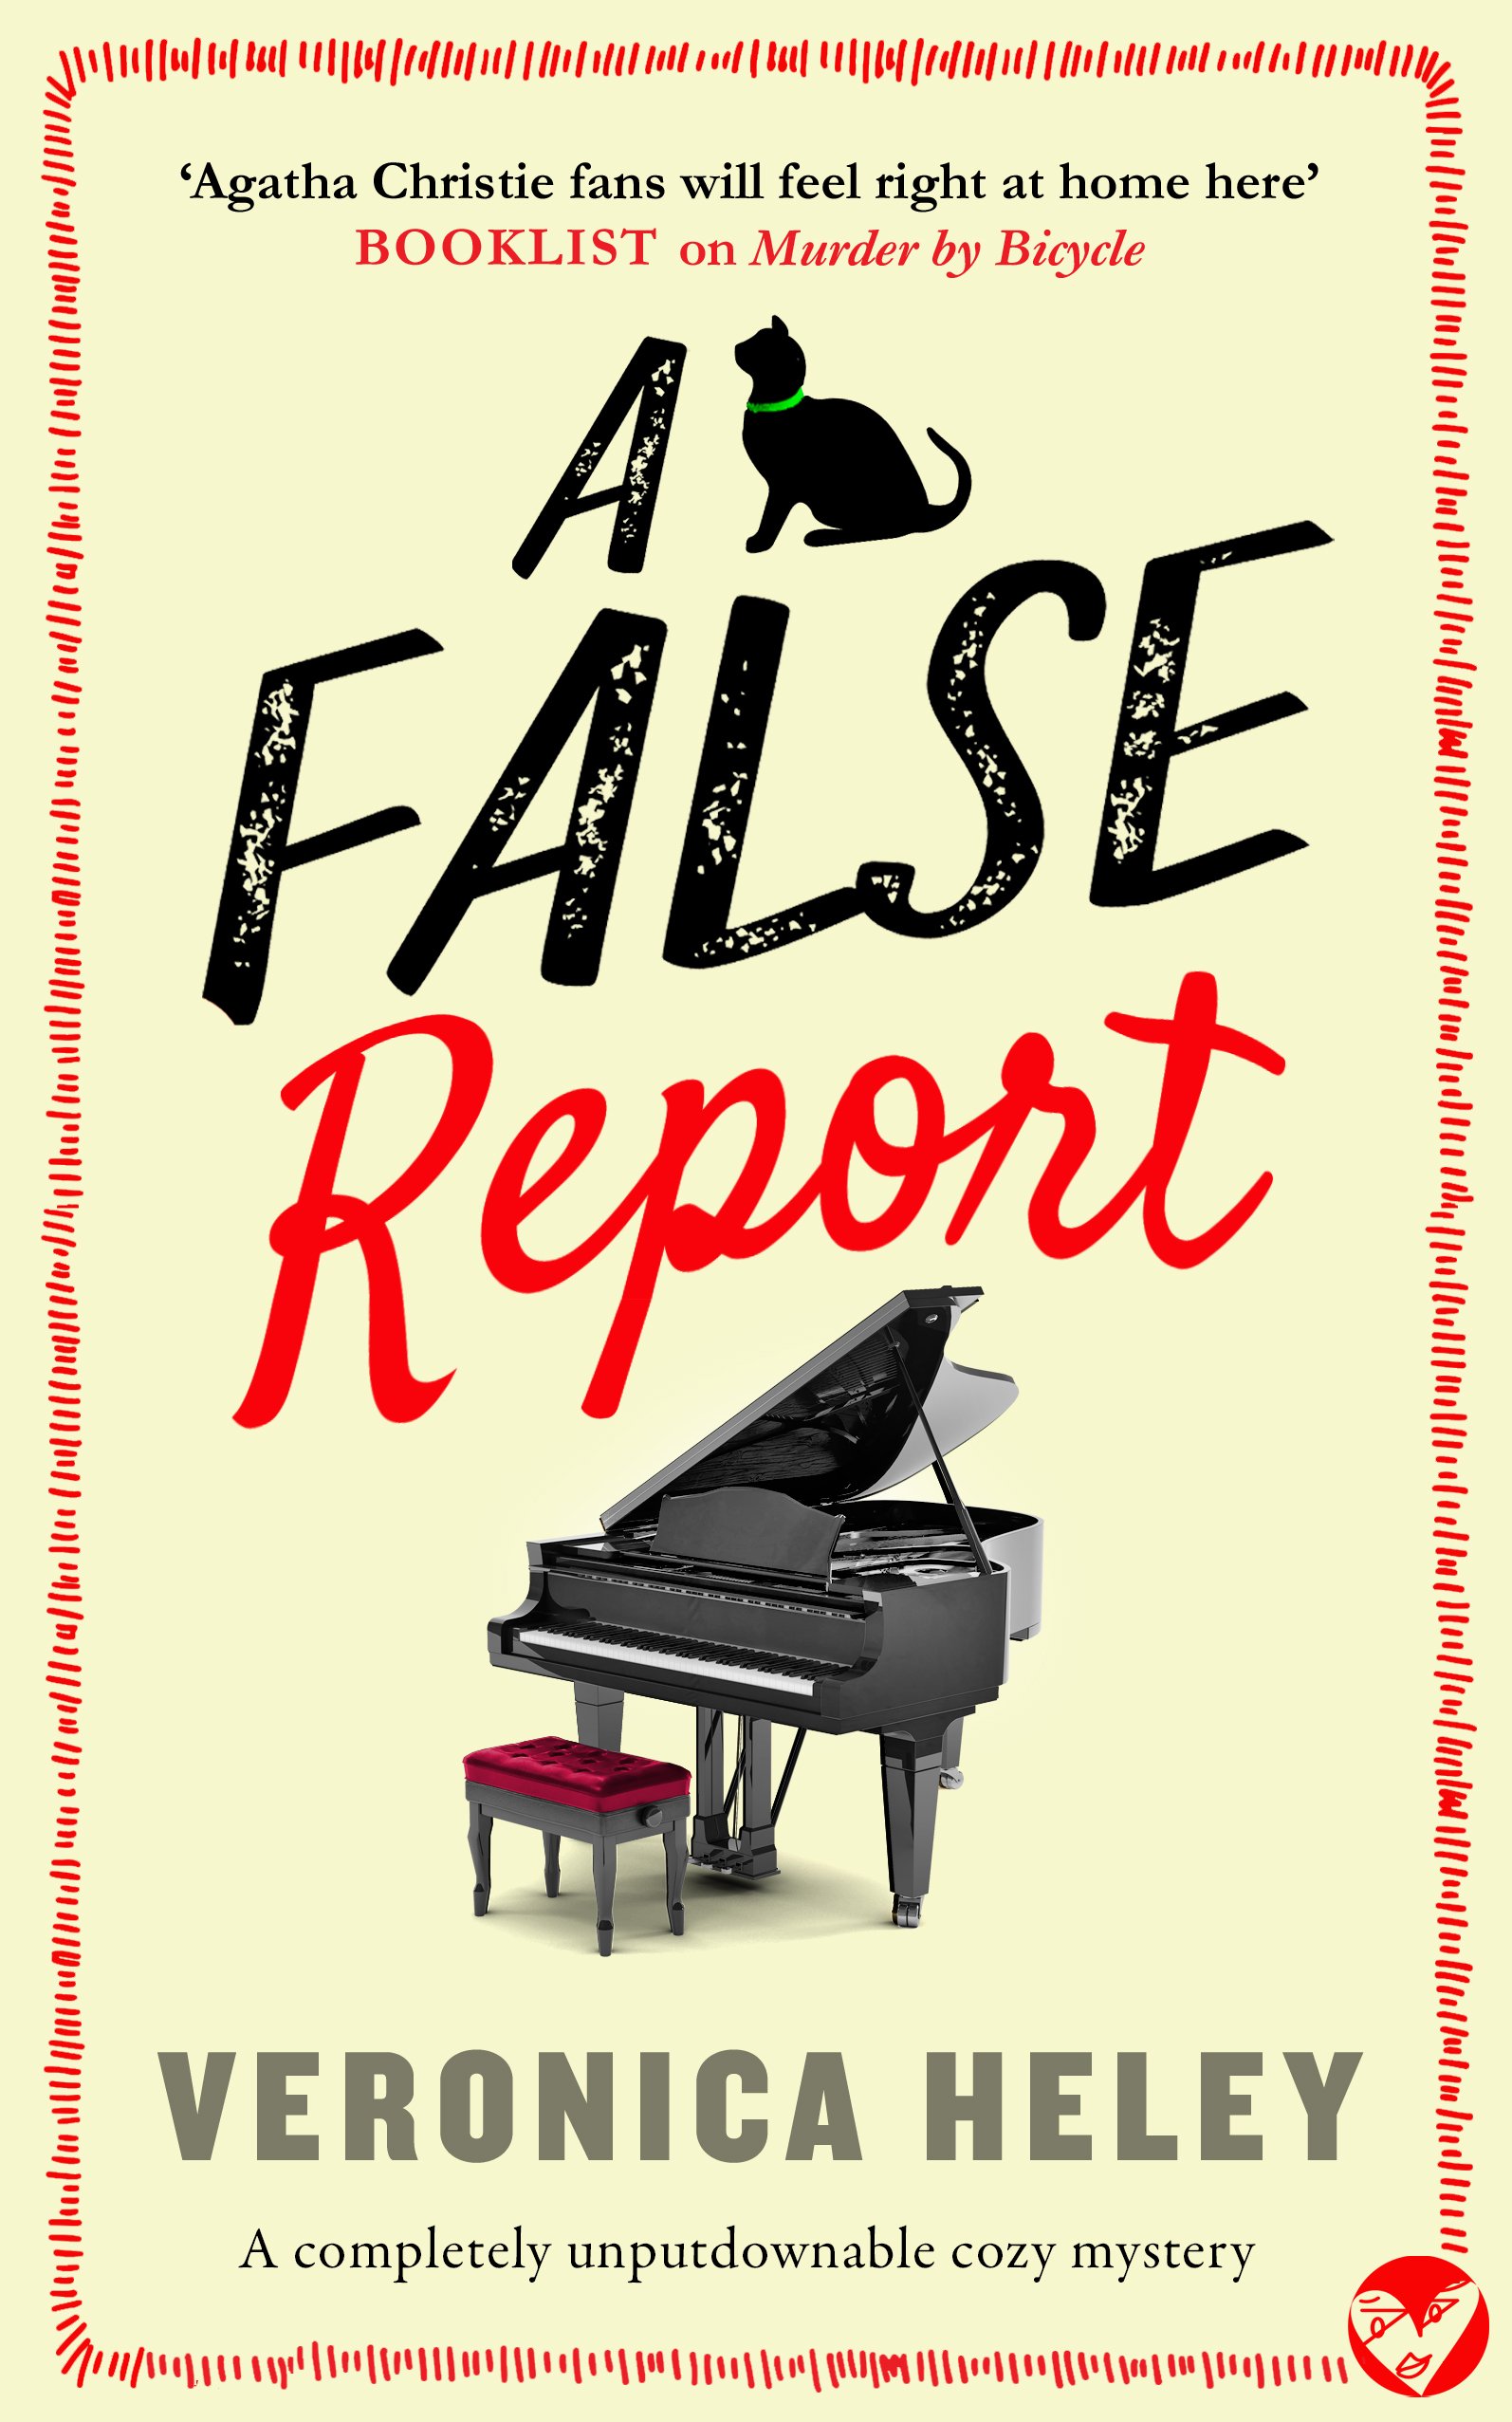 A FALSE REPORT Cover publish.jpg